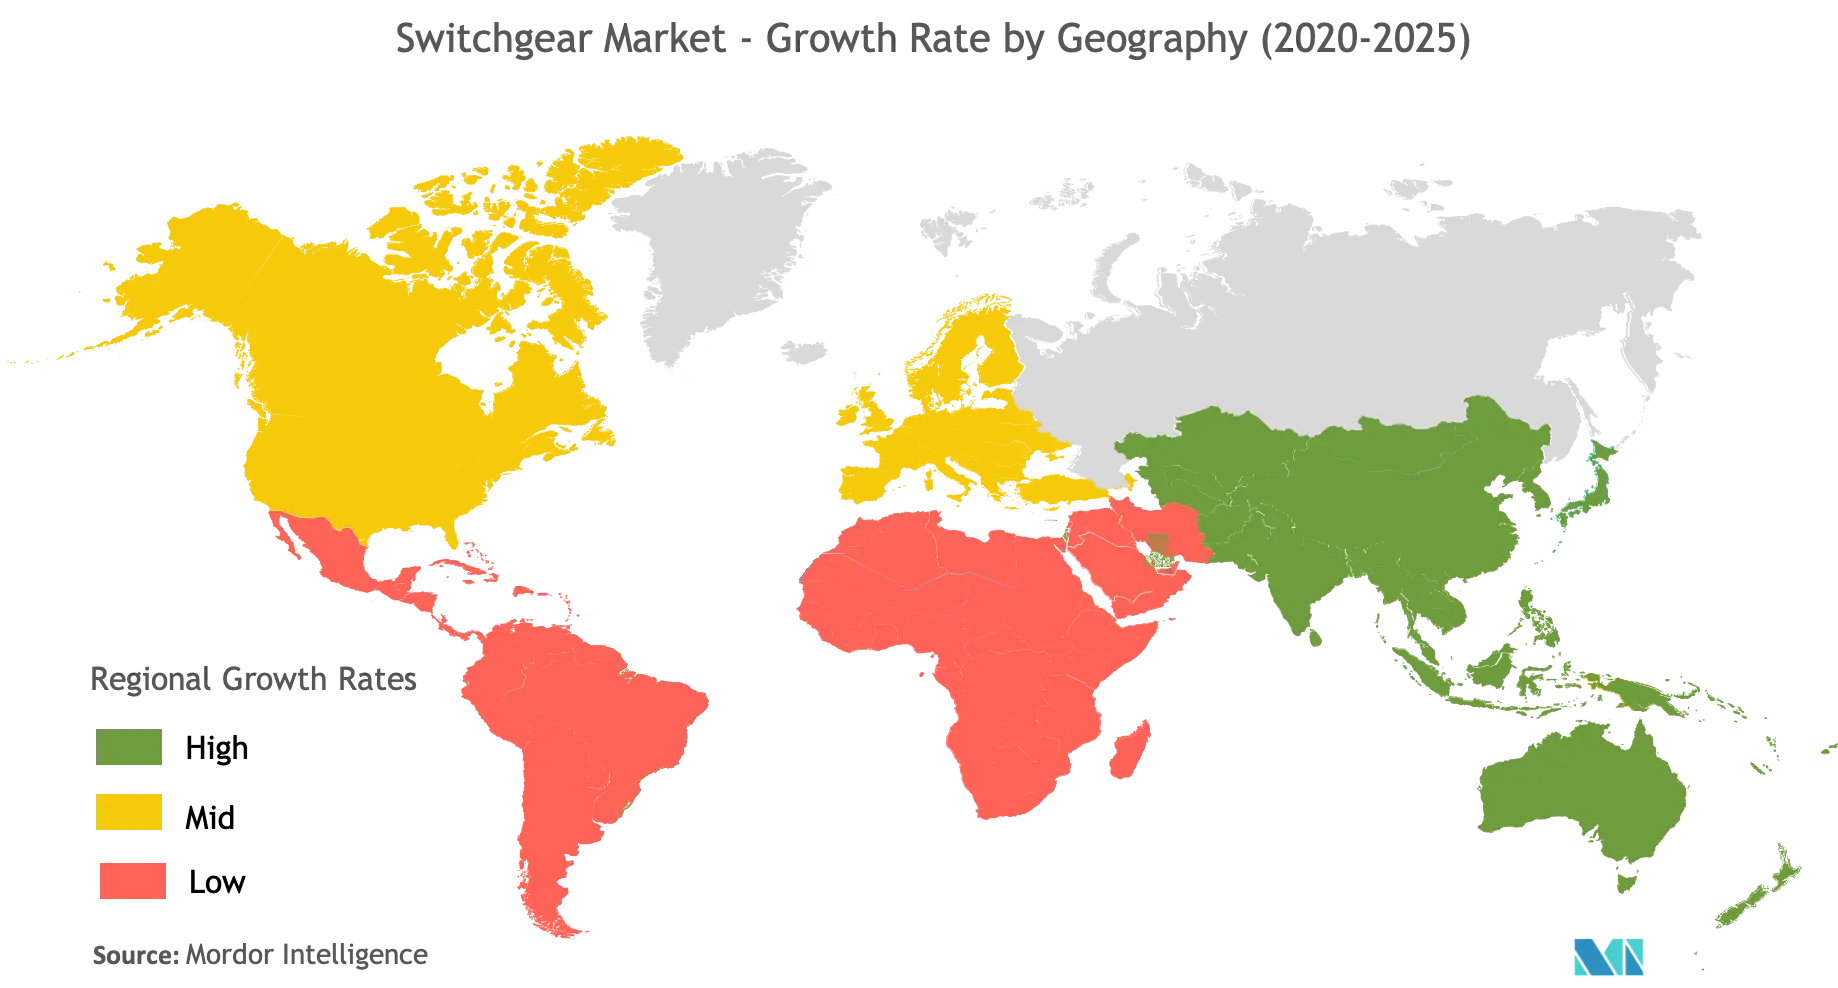 Switchgear Market - Growth Rate by Region (2020 - 2025)